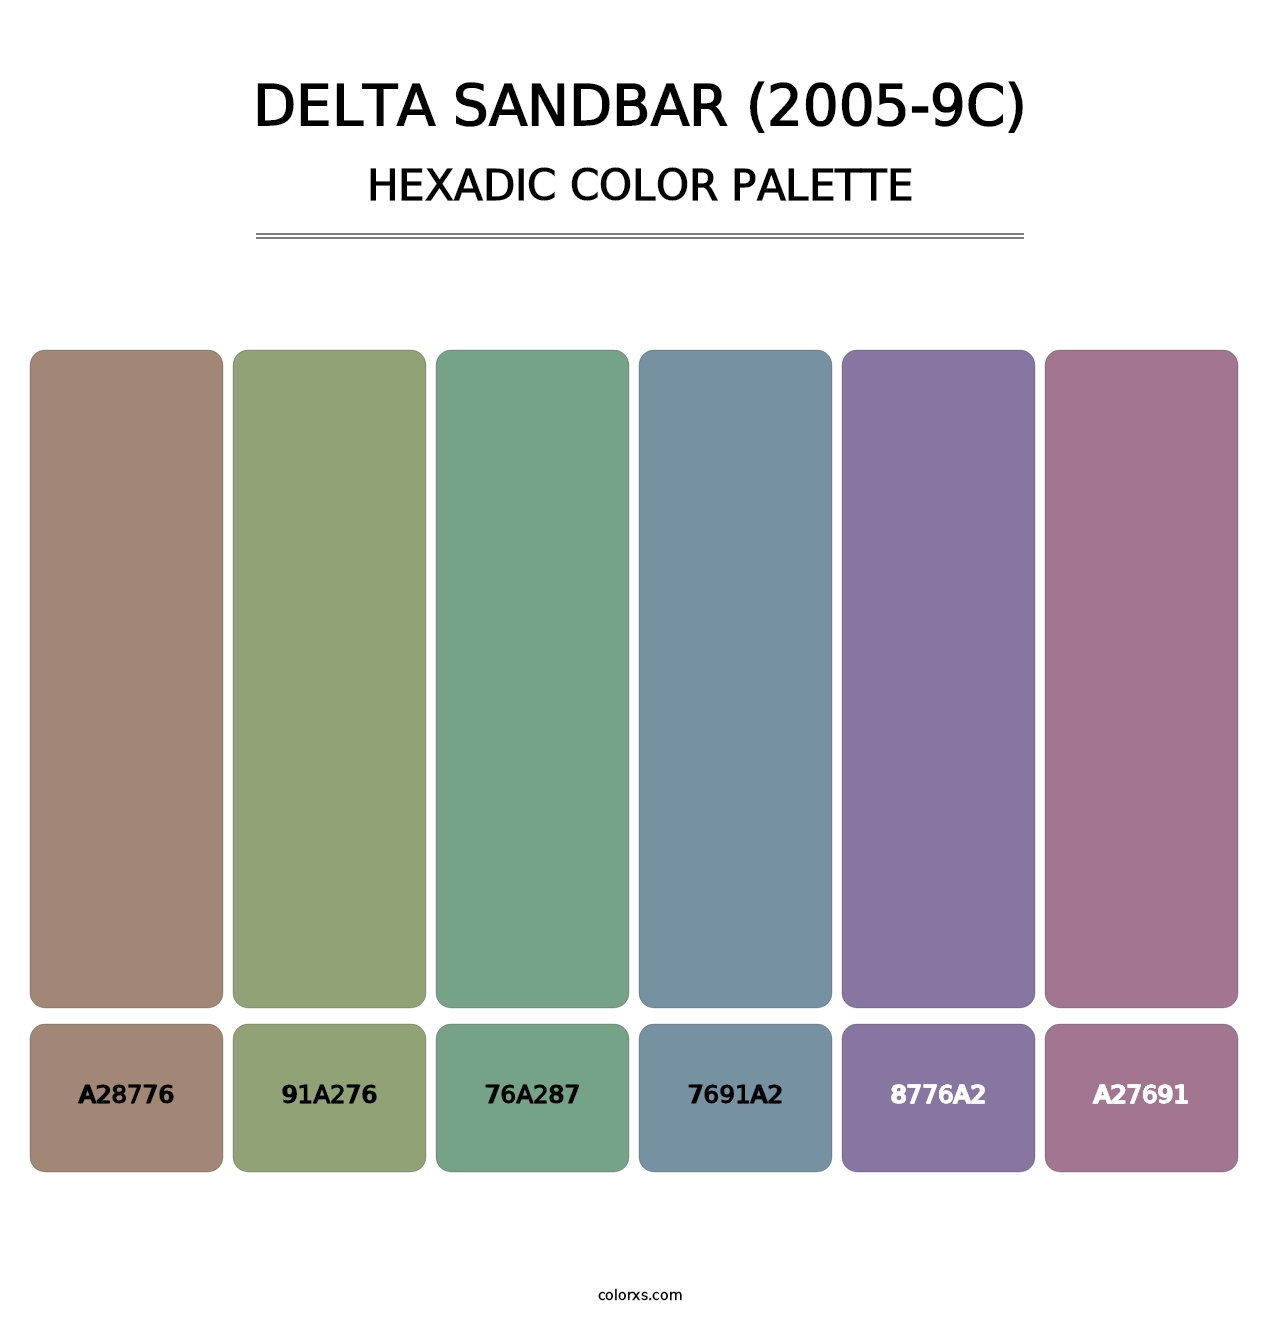 Delta Sandbar (2005-9C) - Hexadic Color Palette